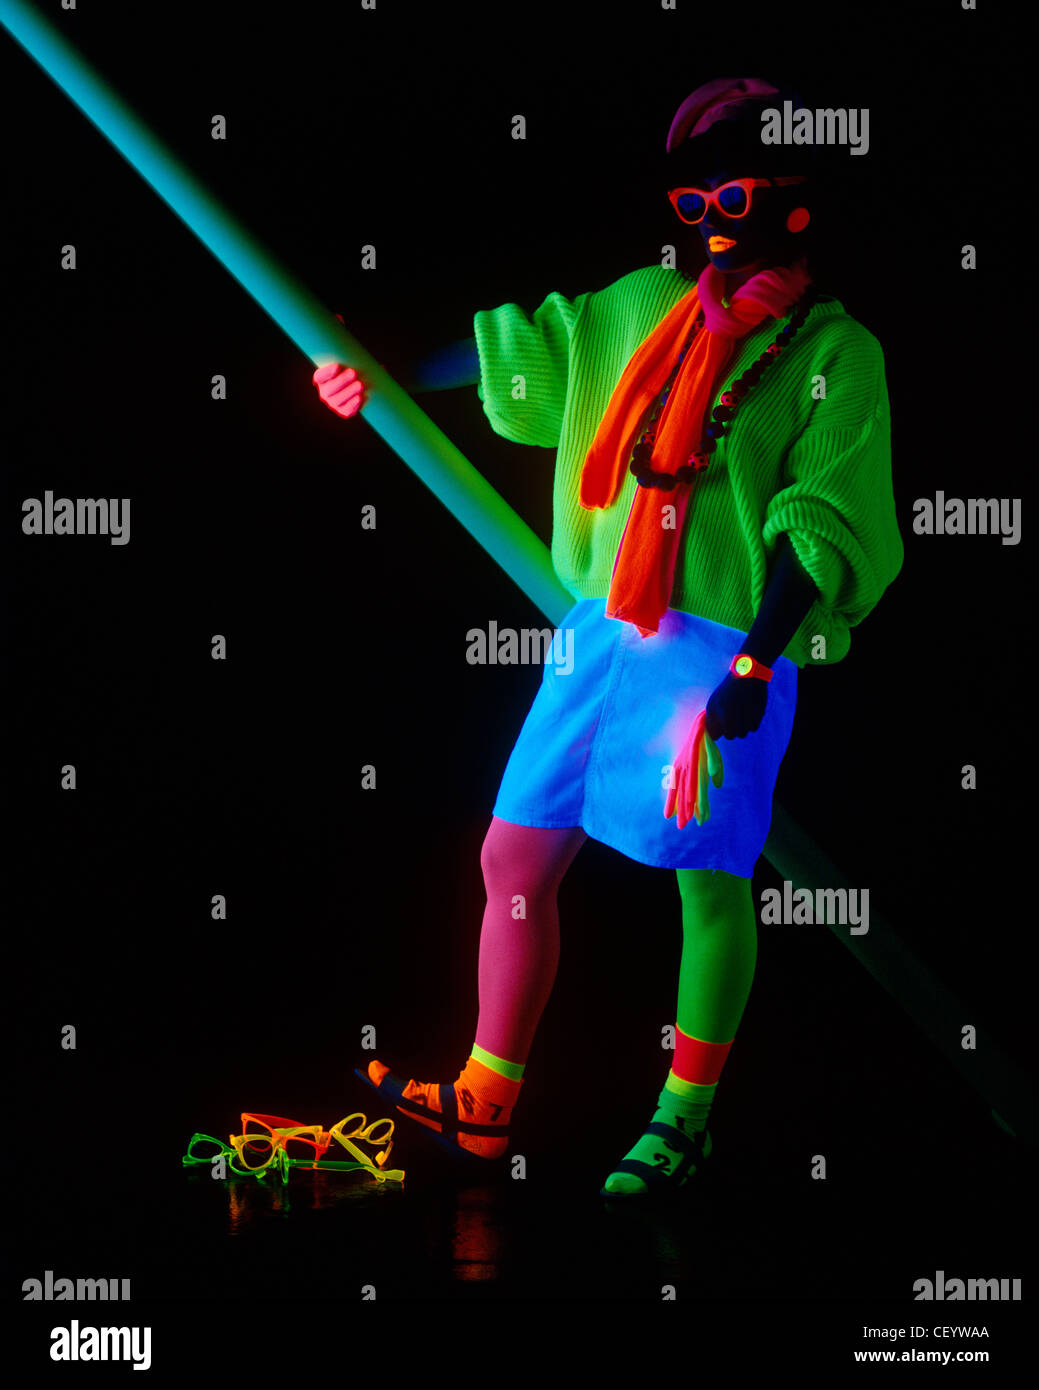 Ropa fluorescente fotografías e imágenes de alta resolución - Alamy